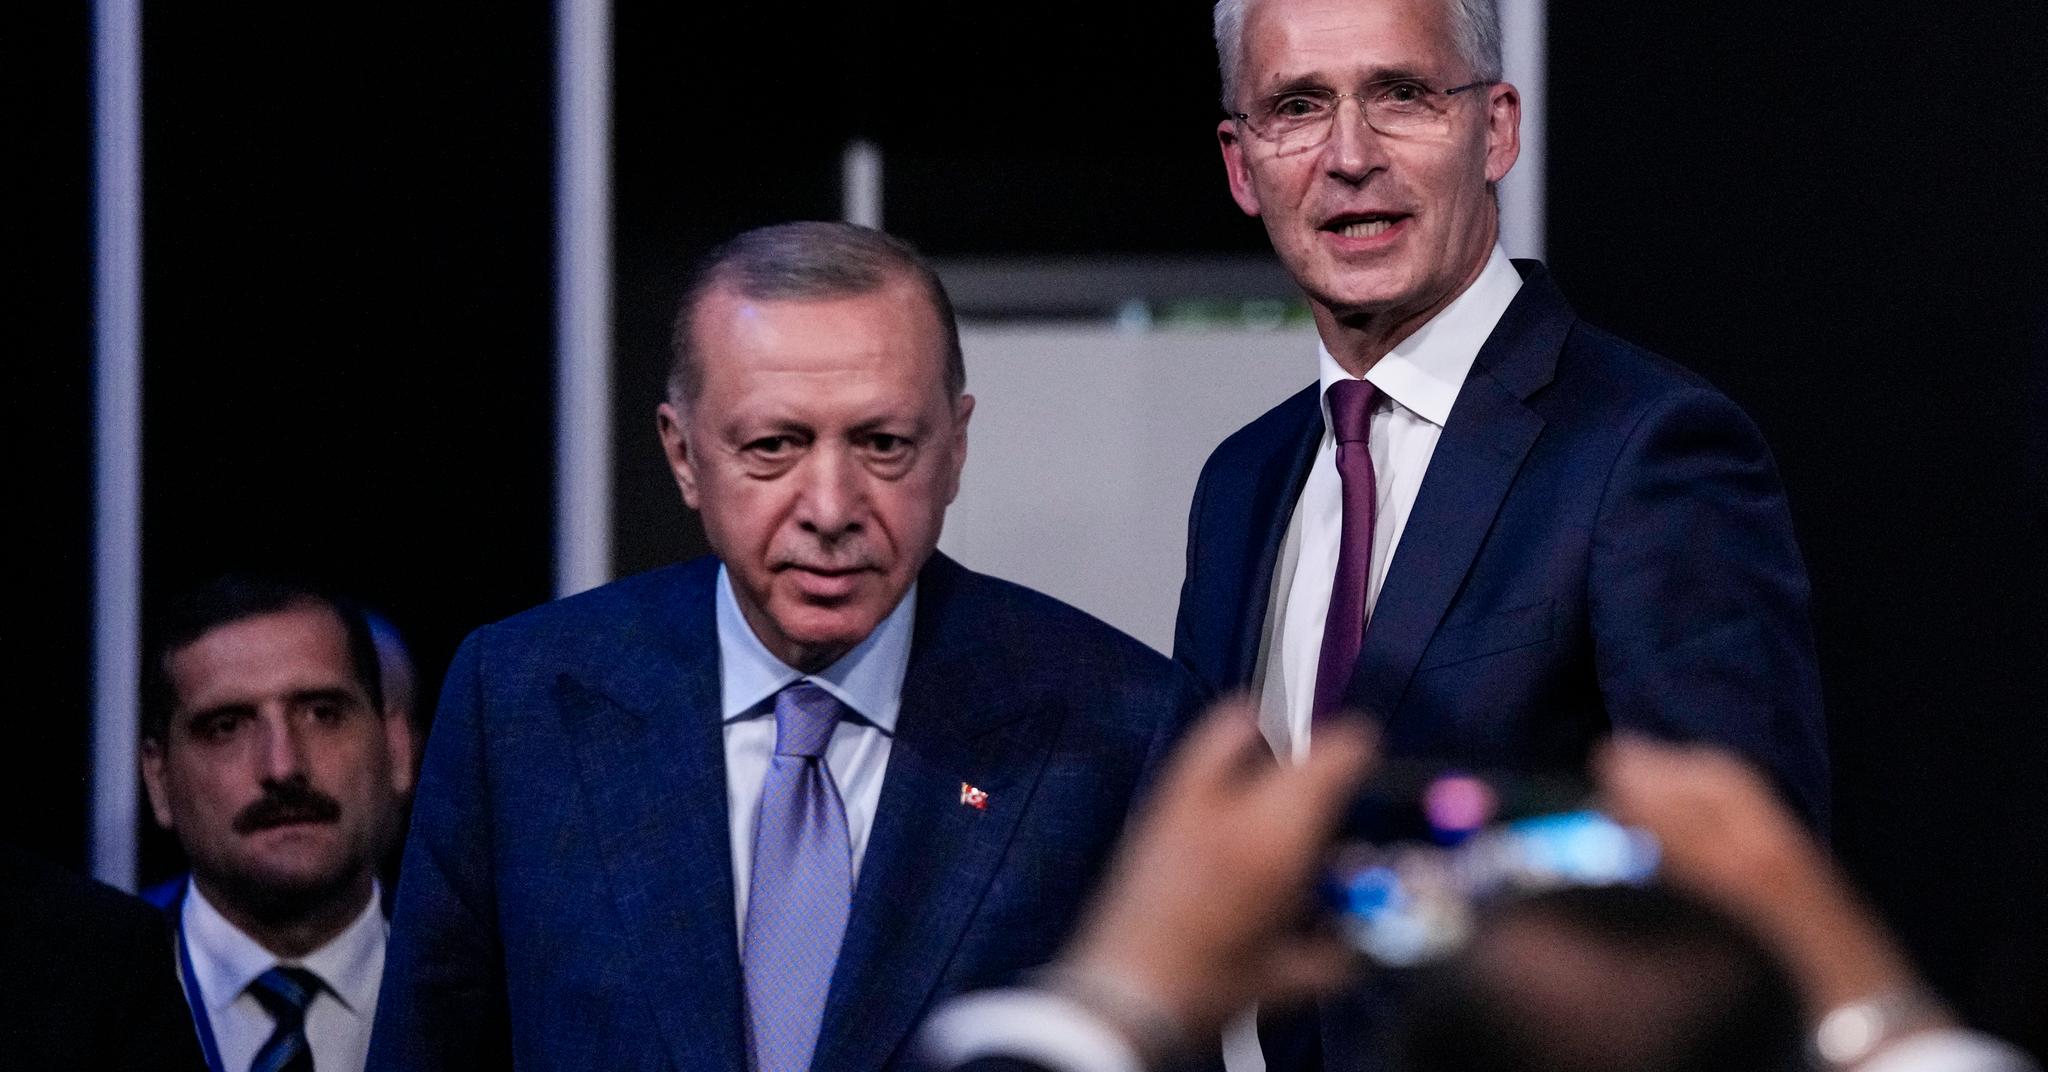 Tyrkias president Recep Tayyip Erdogan og Natos generalsekretær Jens Stoltenberg under Natos toppmøte i Madrid denne uken.